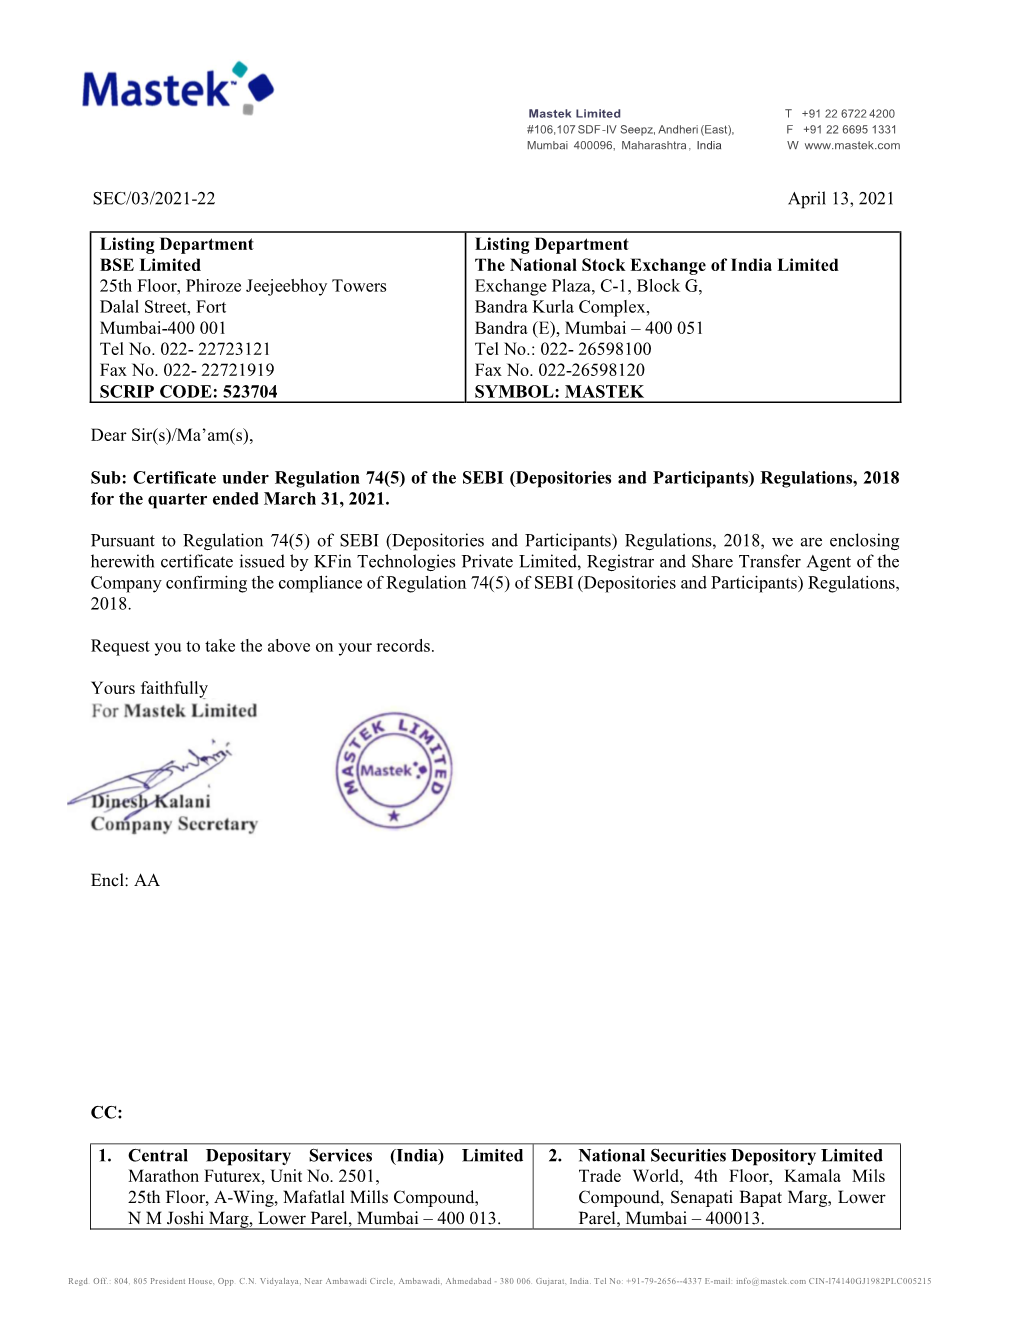 SEC/03/2021-22 April 13, 2021 Listing Department BSE Limited 25Th Floor, Phiroze Jeejeebhoy Towers Dalal Street, Fort Mumbai-400